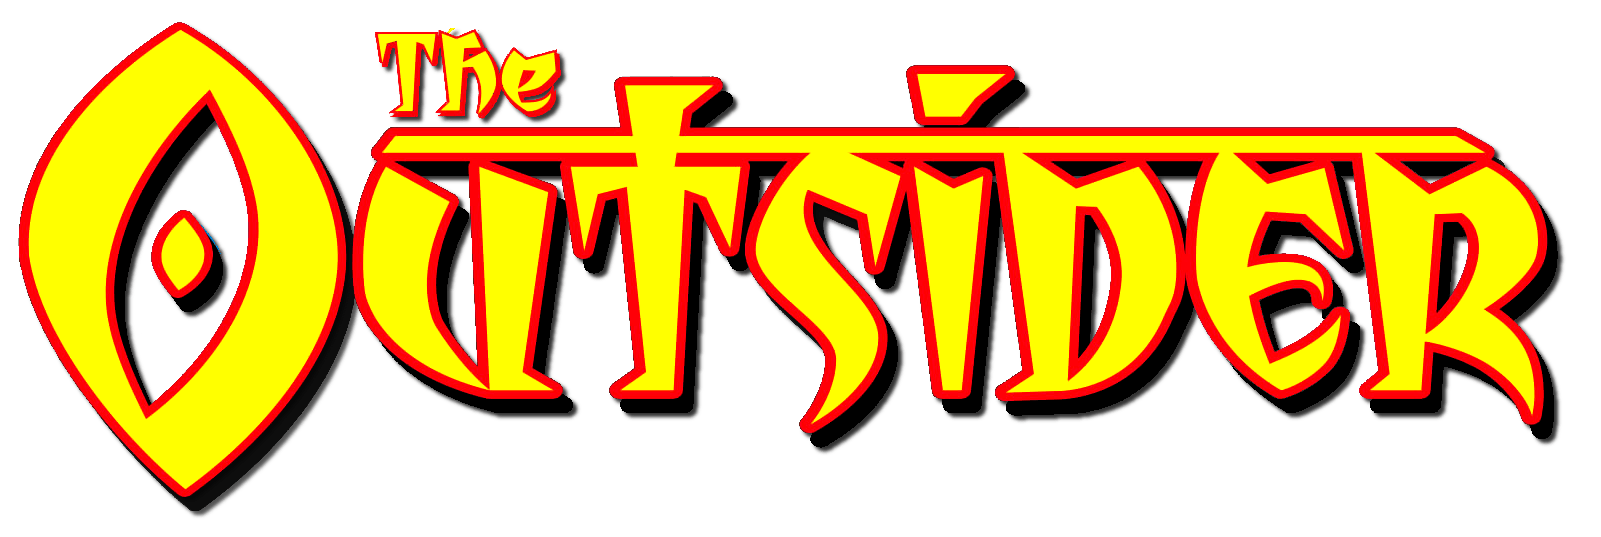 Flashpoint Logo - Image - The Outsider flashpoint logo.png | LOGO Comics Wiki | FANDOM ...